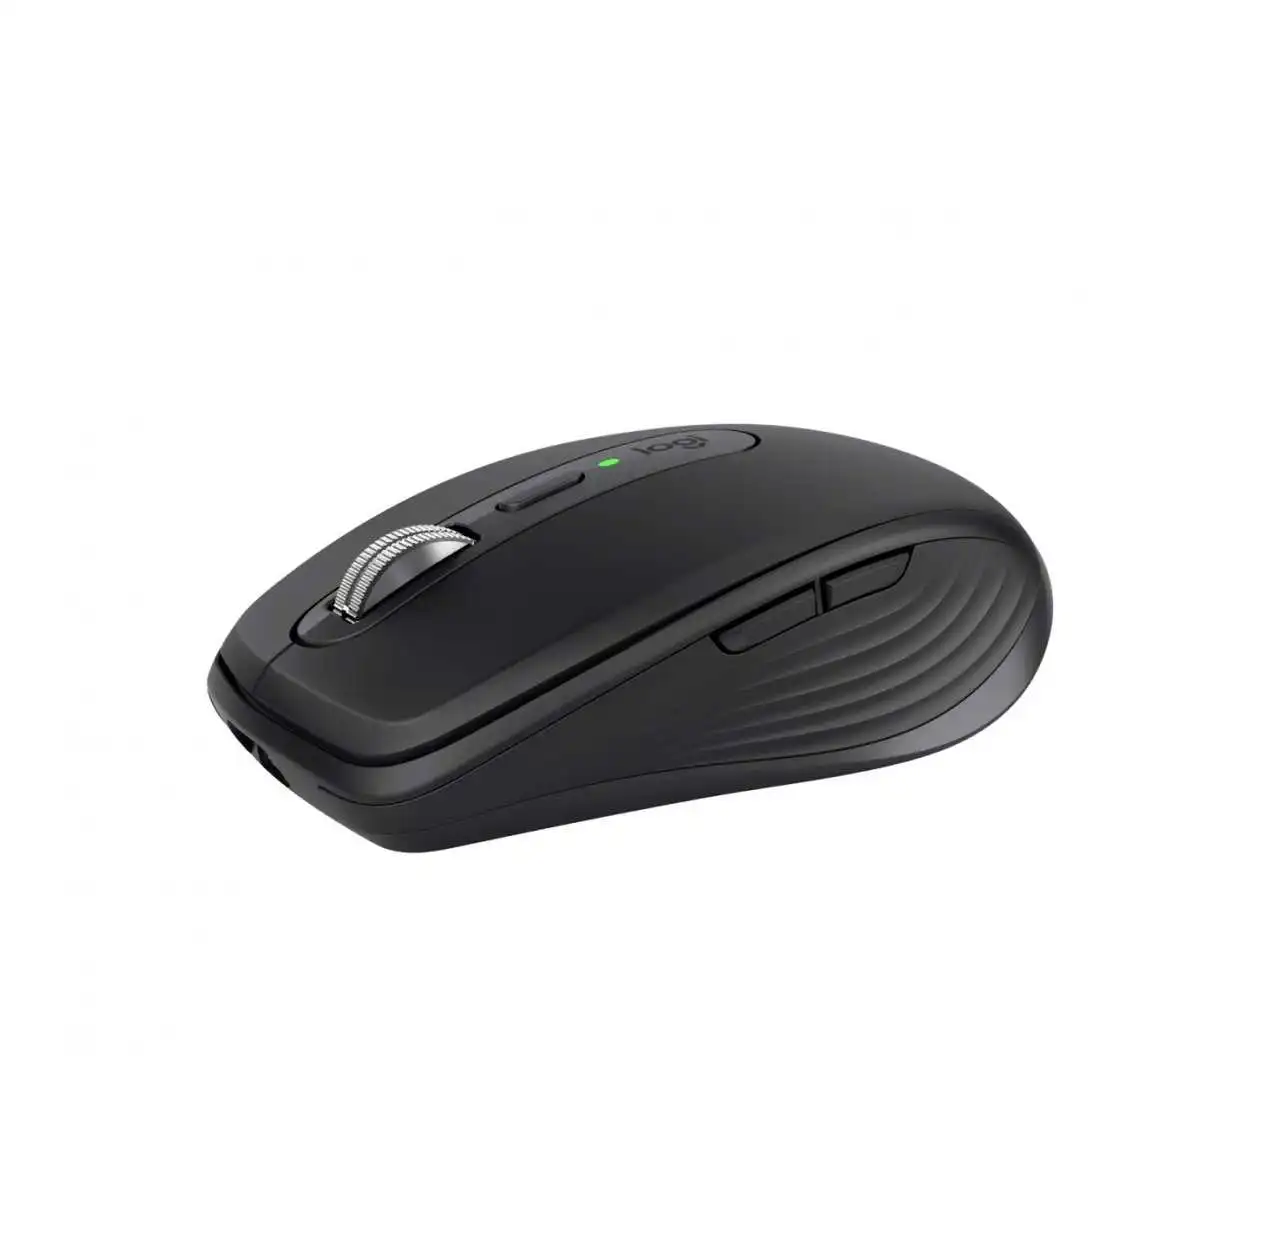 logItech-mx-anywhere-3s-kompakt-mouse-910-006929-ürün-resmi